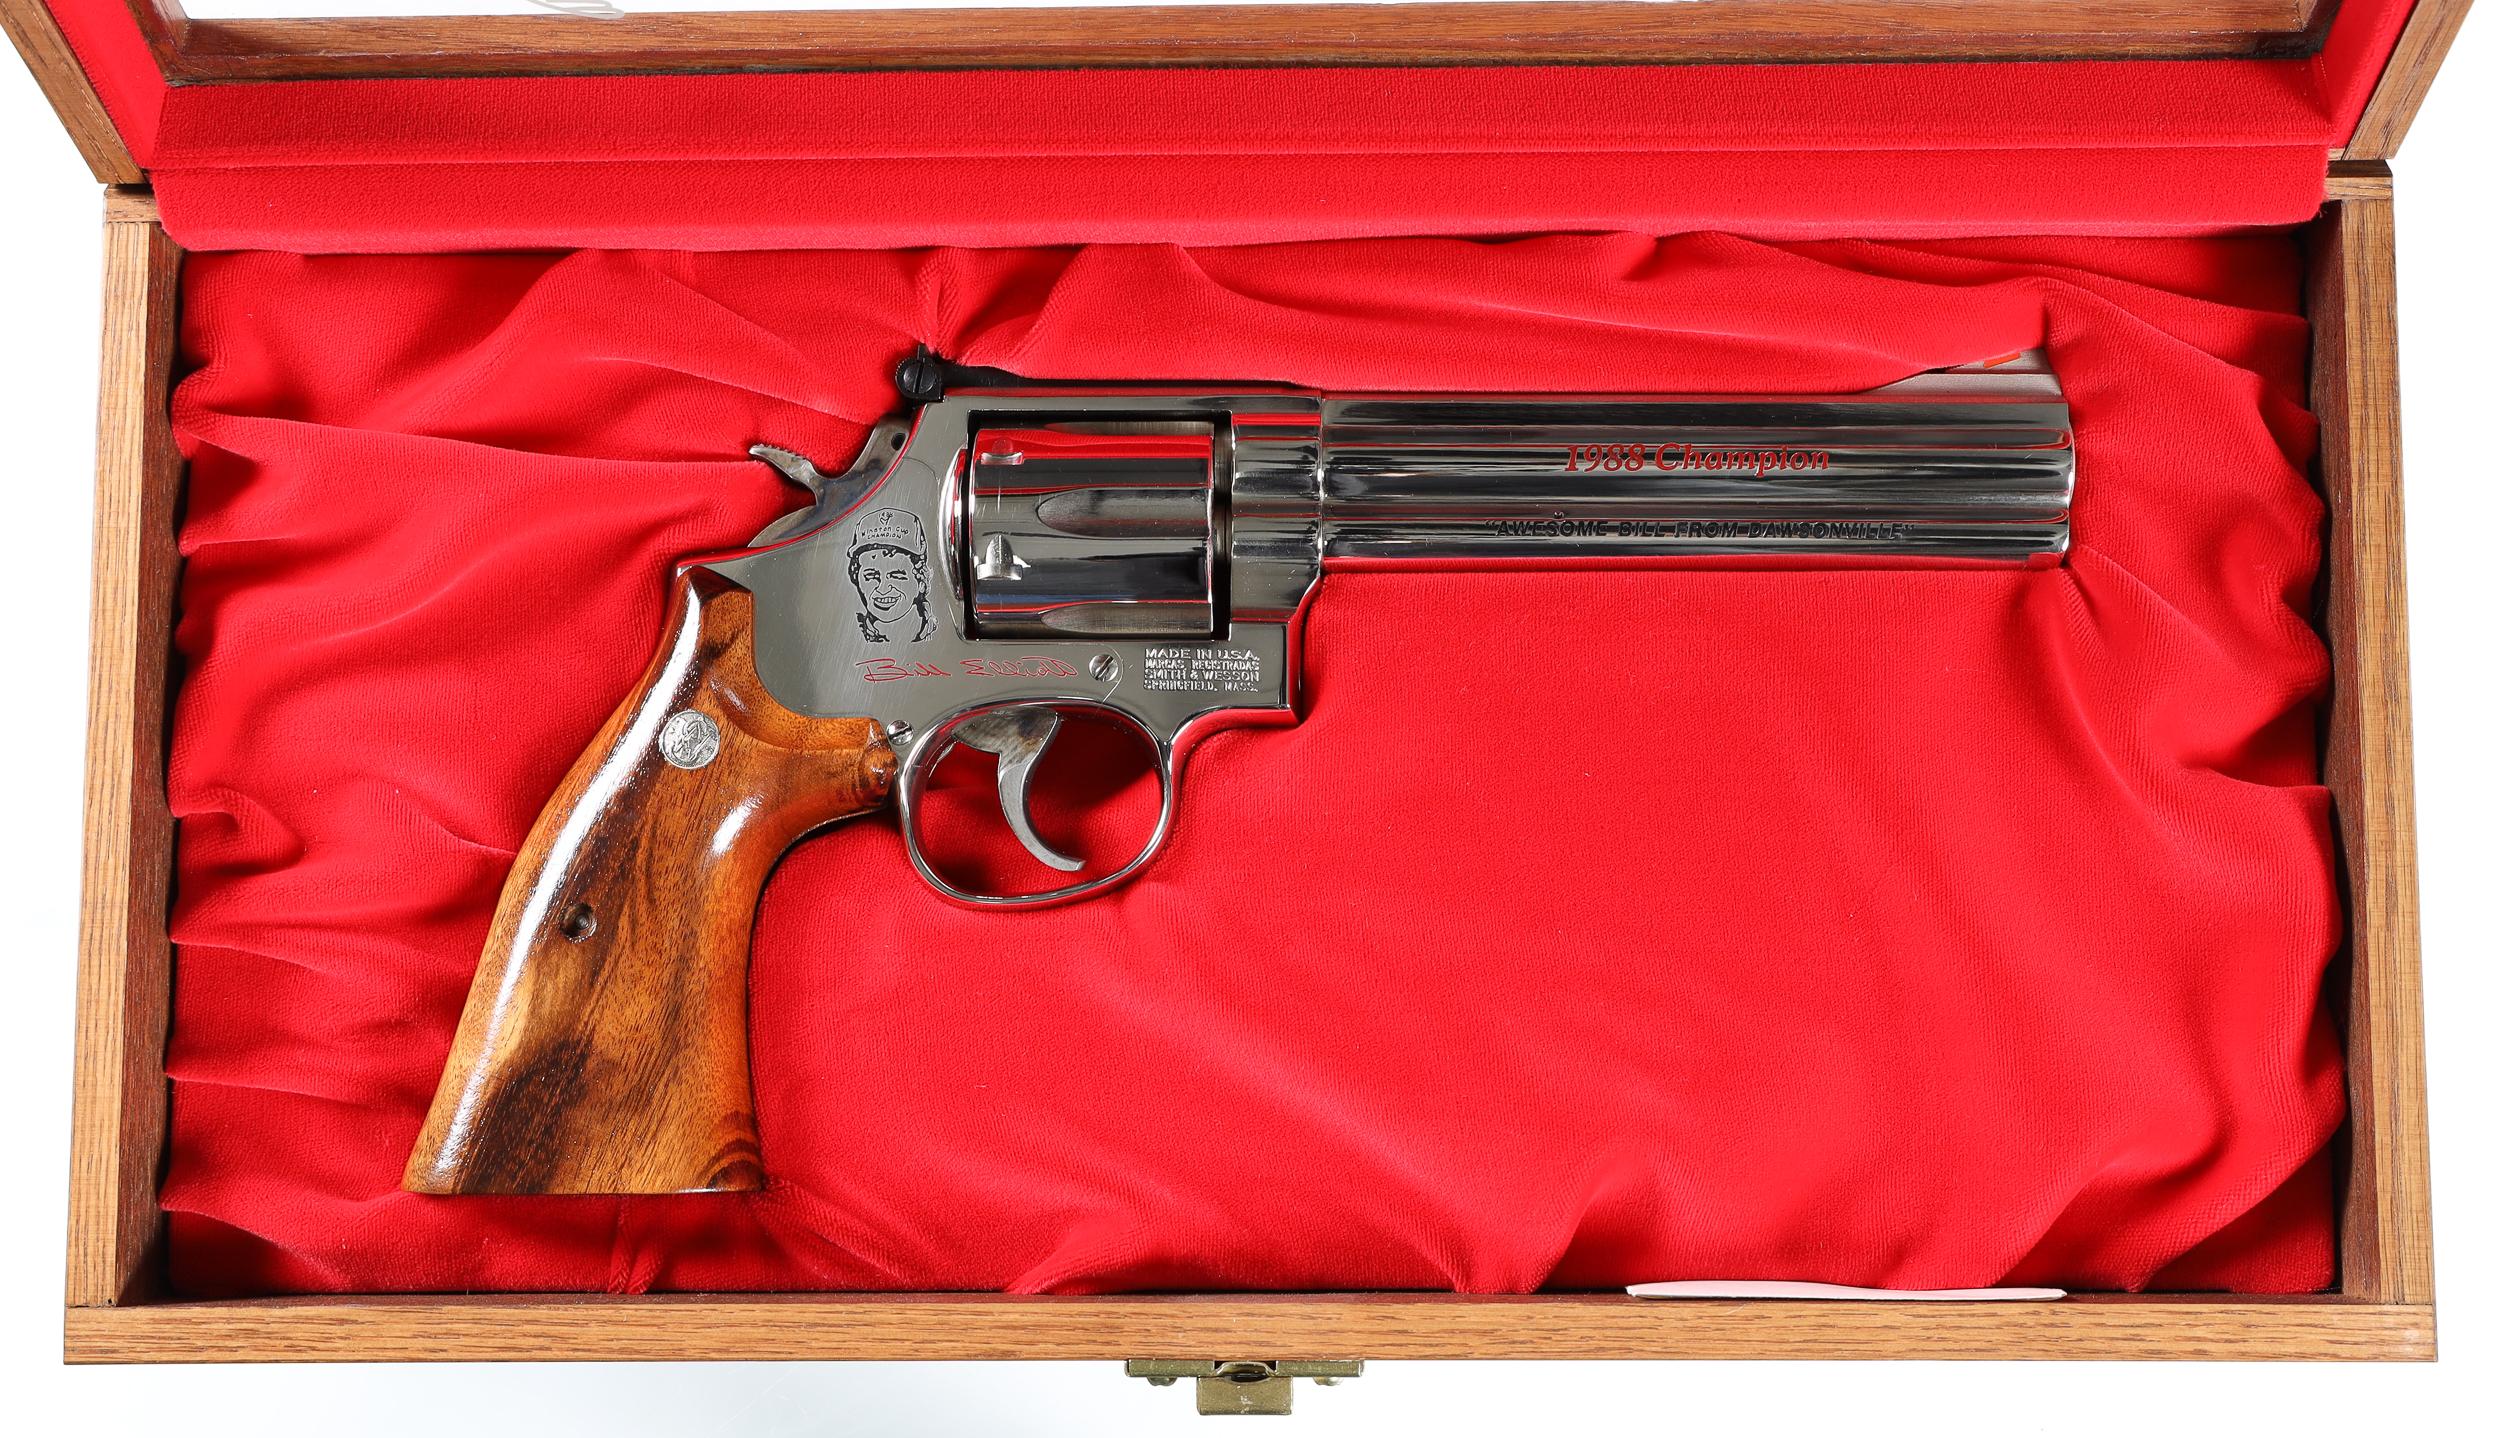 Smith & Wesson 586-3 Bill Elliot Revolver .357 mag